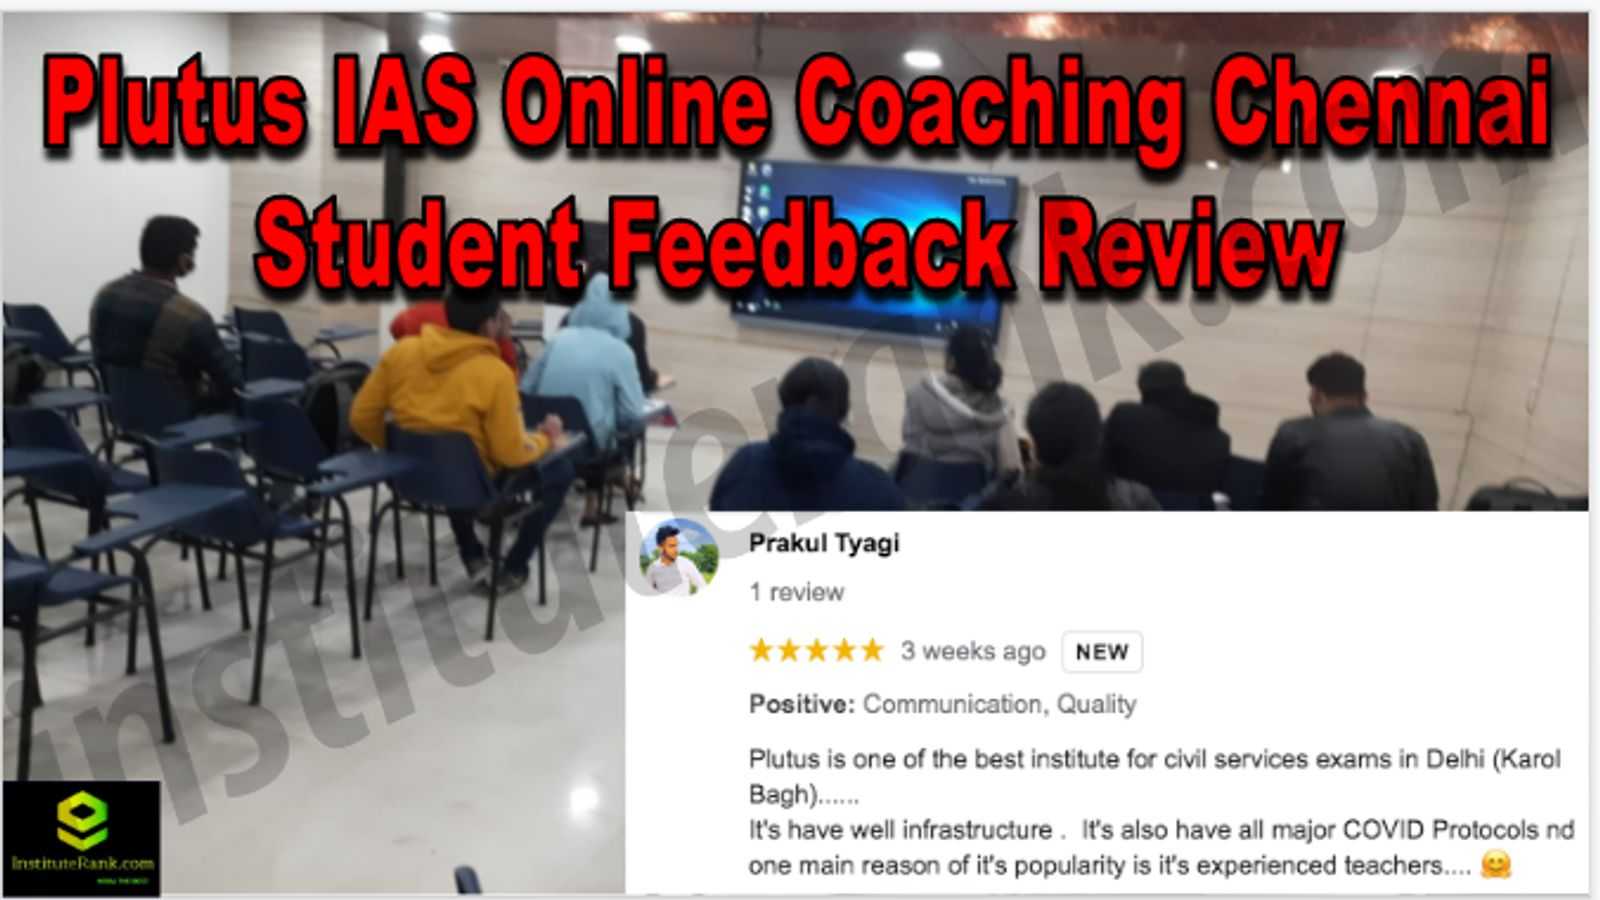 Plutus IAS Online Coaching Chennai Student Feedback Reviews